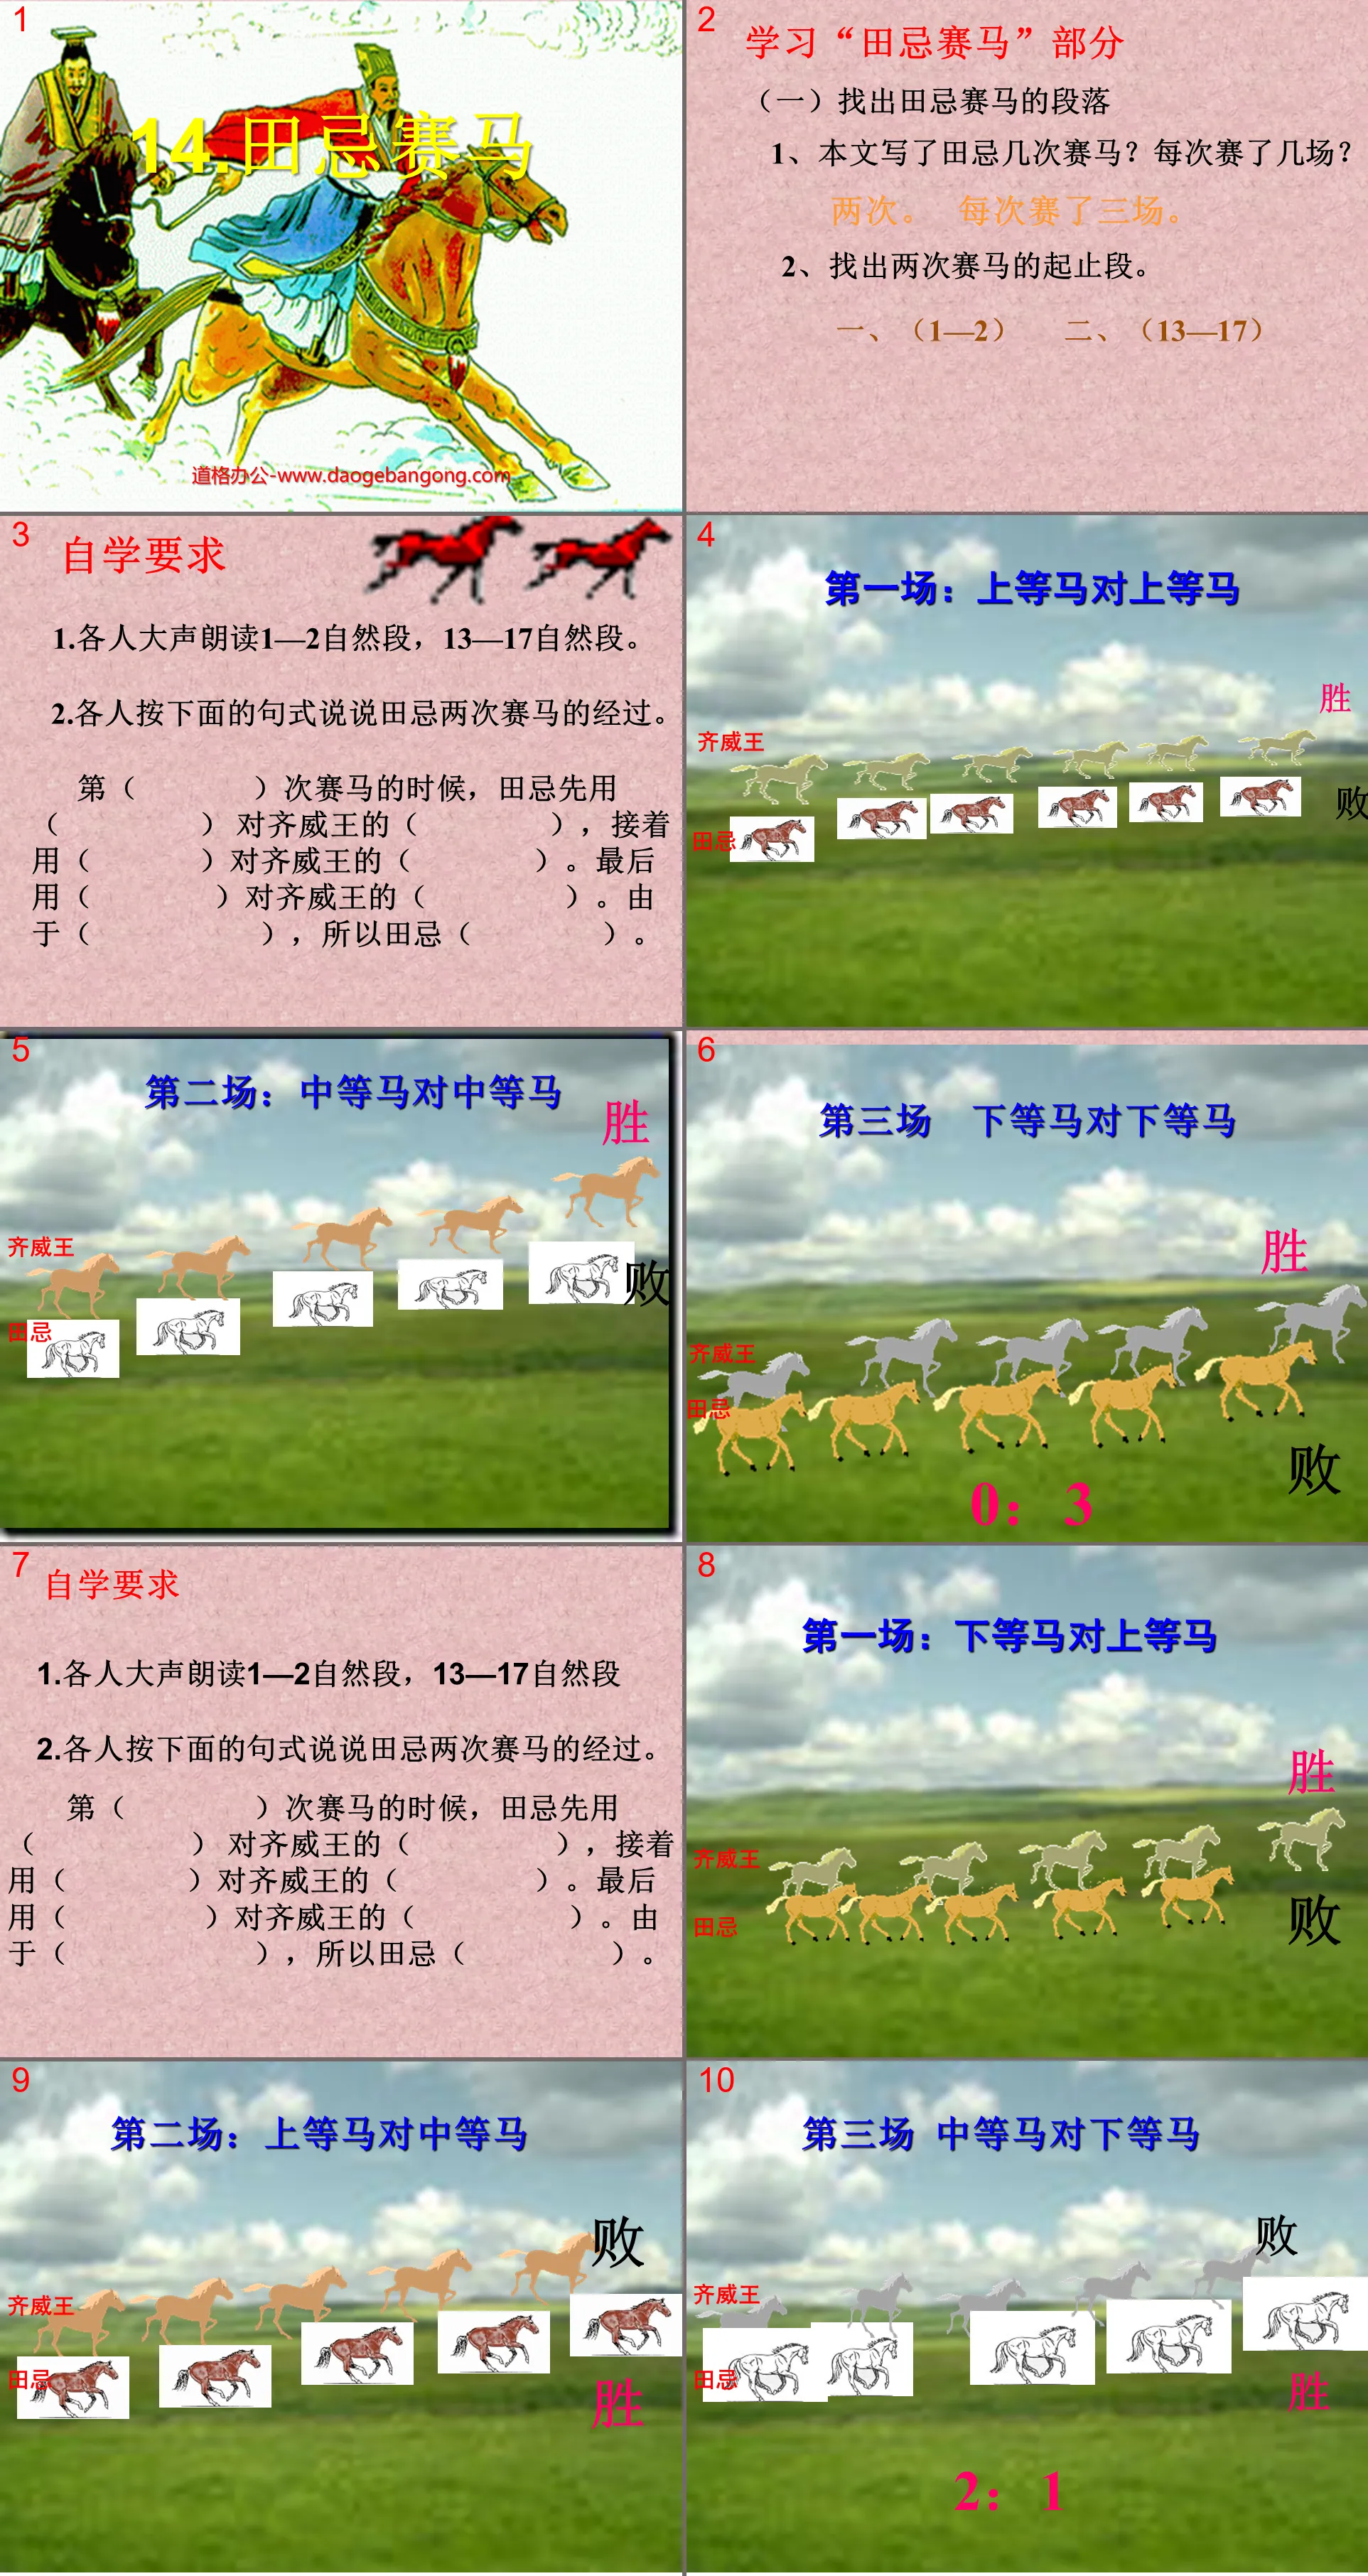 "Tian Ji Horse Racing" PPT Courseware 2